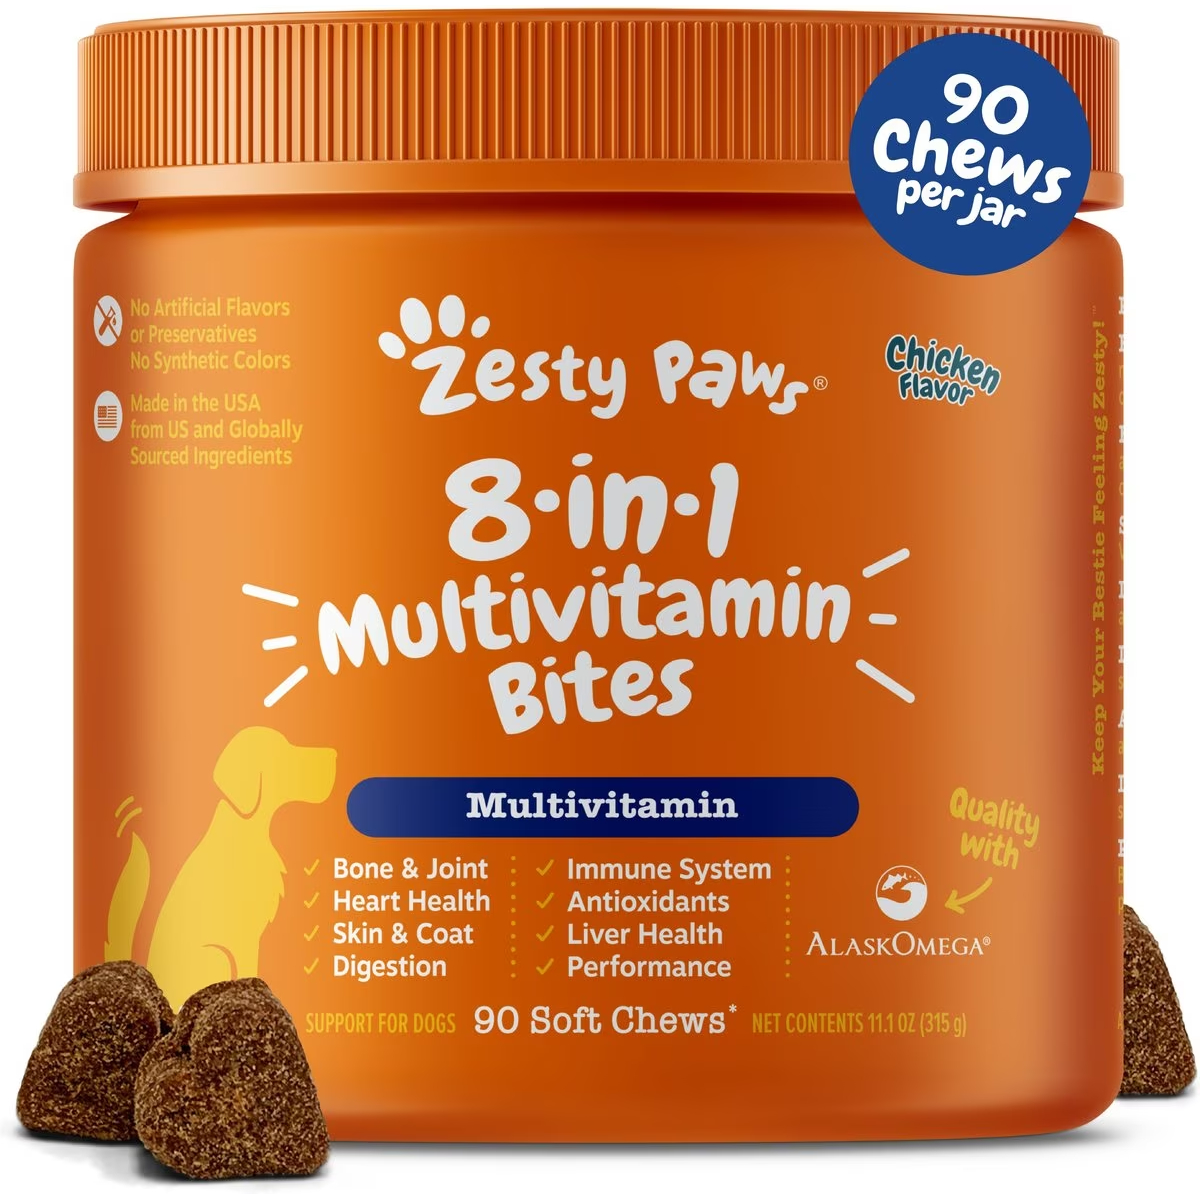 Zesty Paws Multivitamin 8-in-1 Bites Chicken Flavored Soft Chews Supplement for Dogs